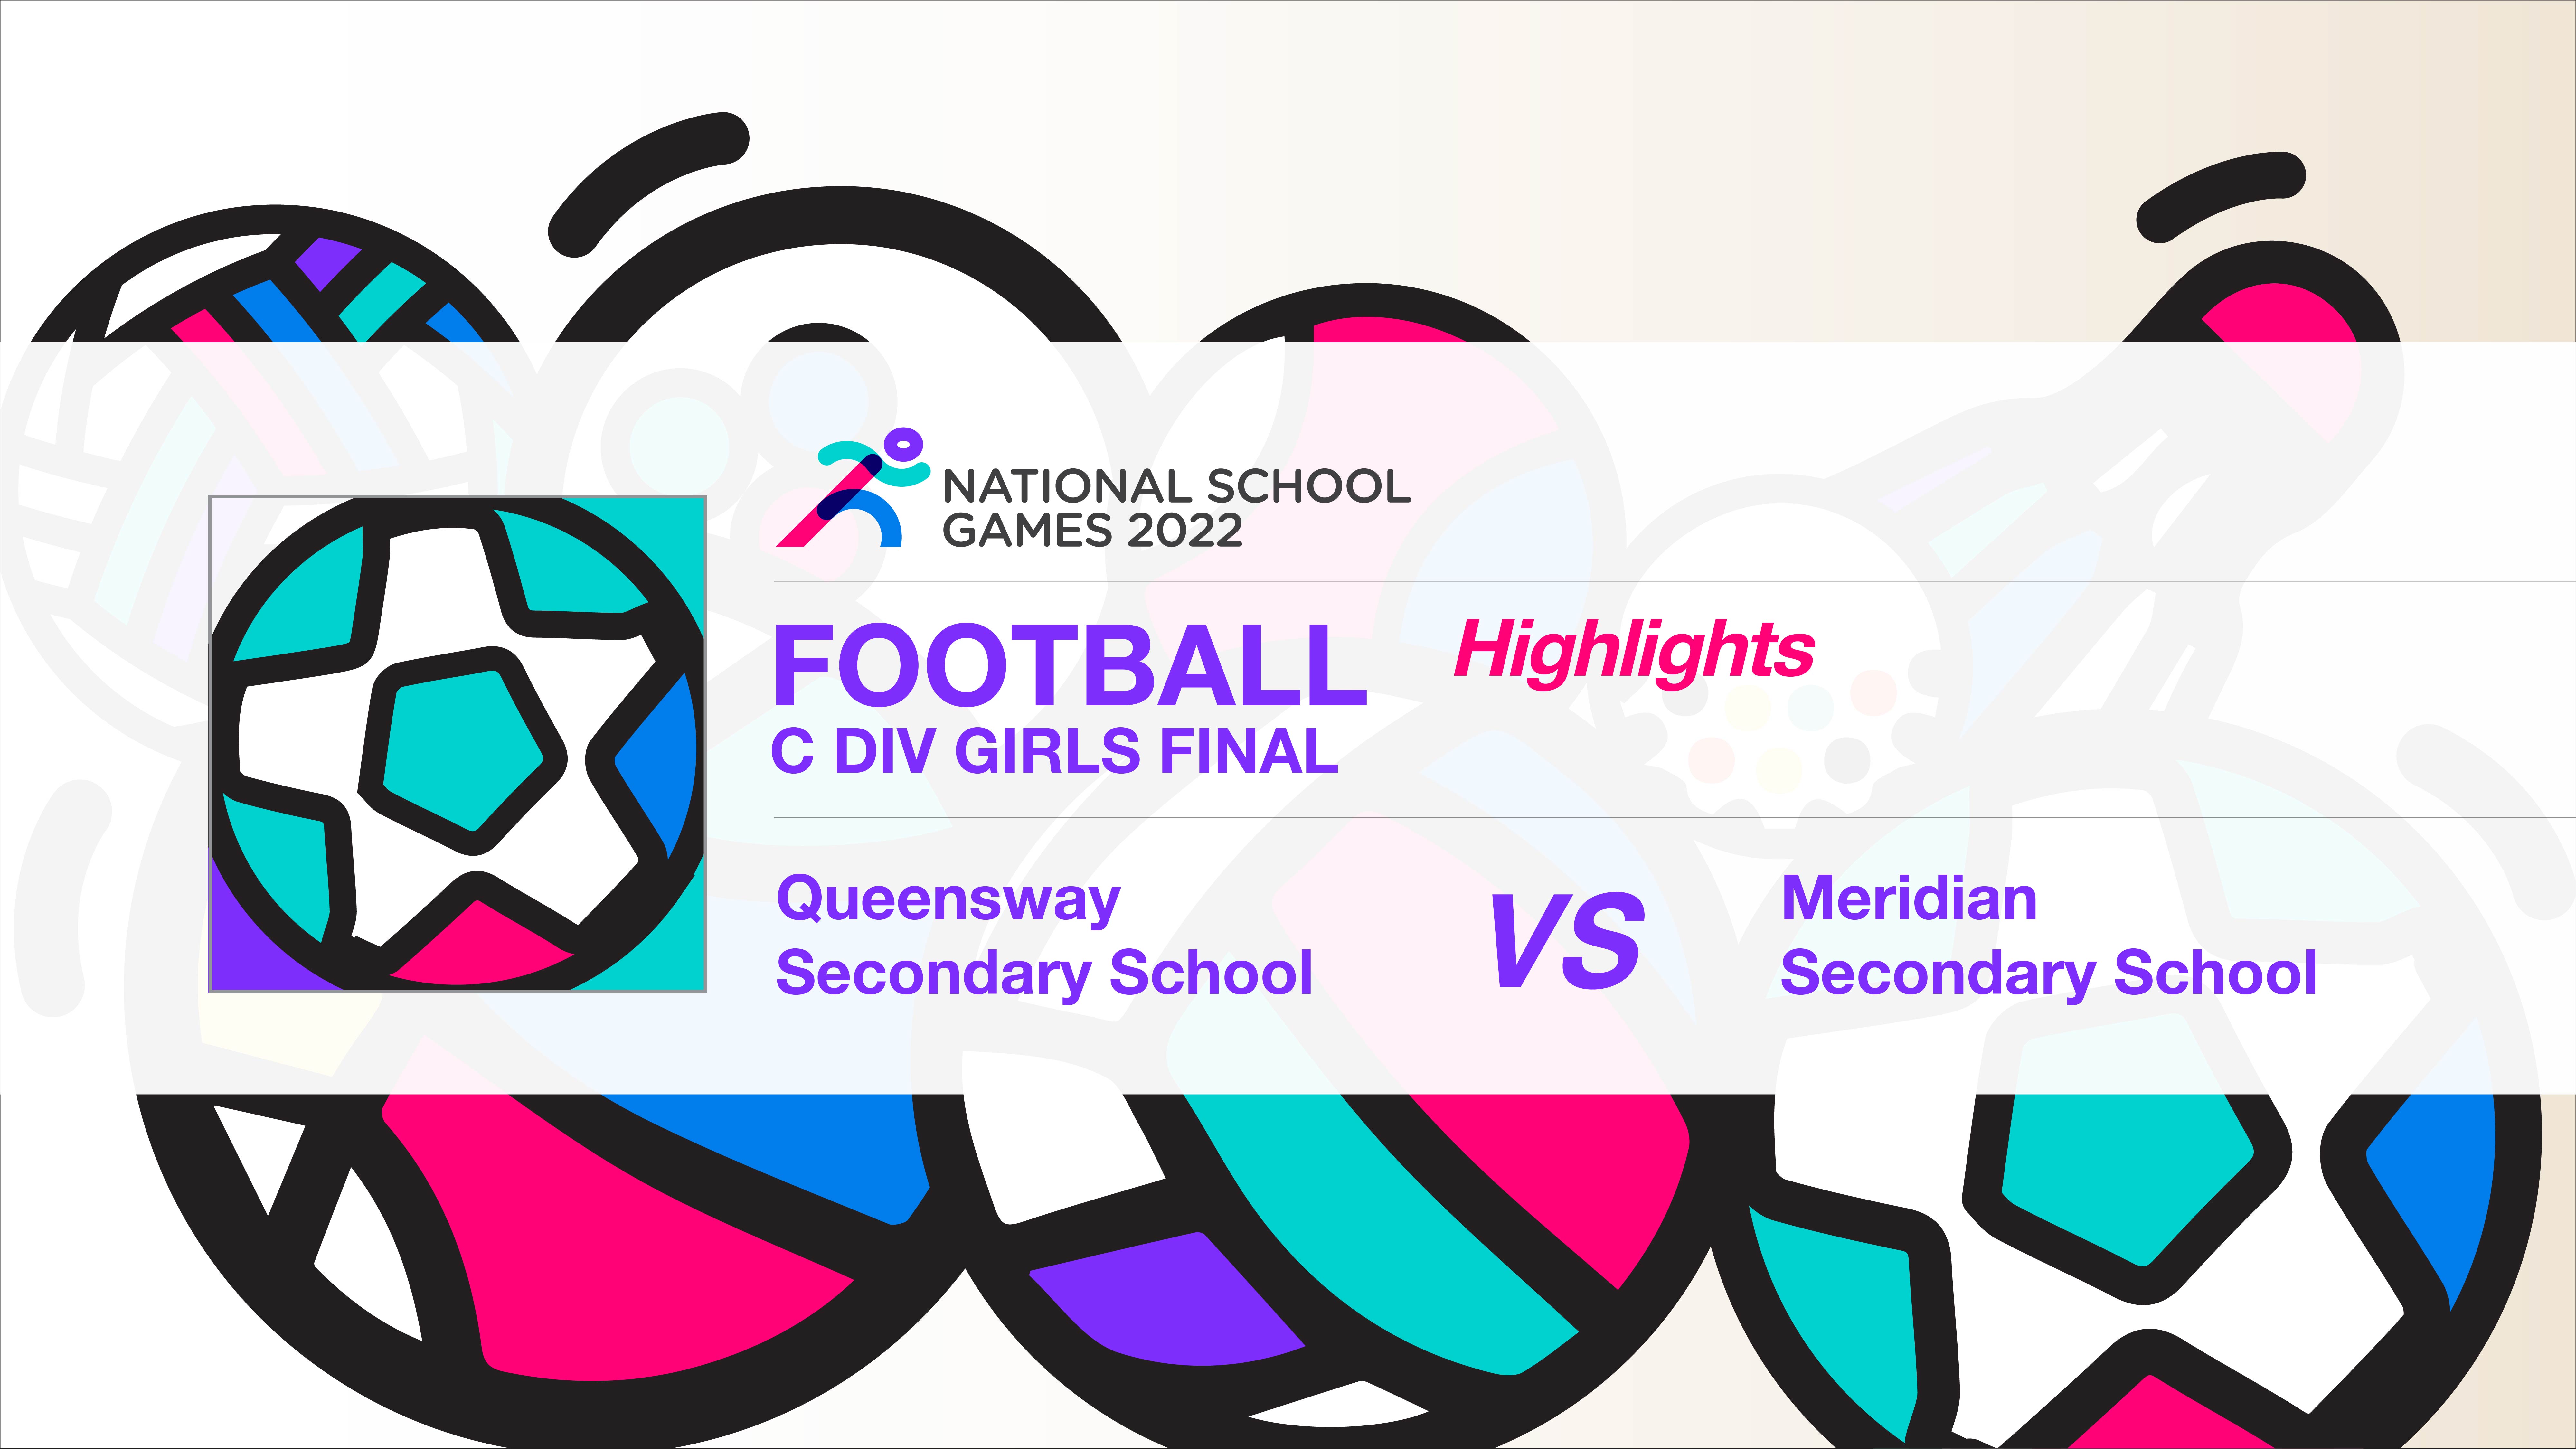 SSSC Football National C Division Girls Final | Queensway Secondary School vs Meridian Secondary School - Highlights